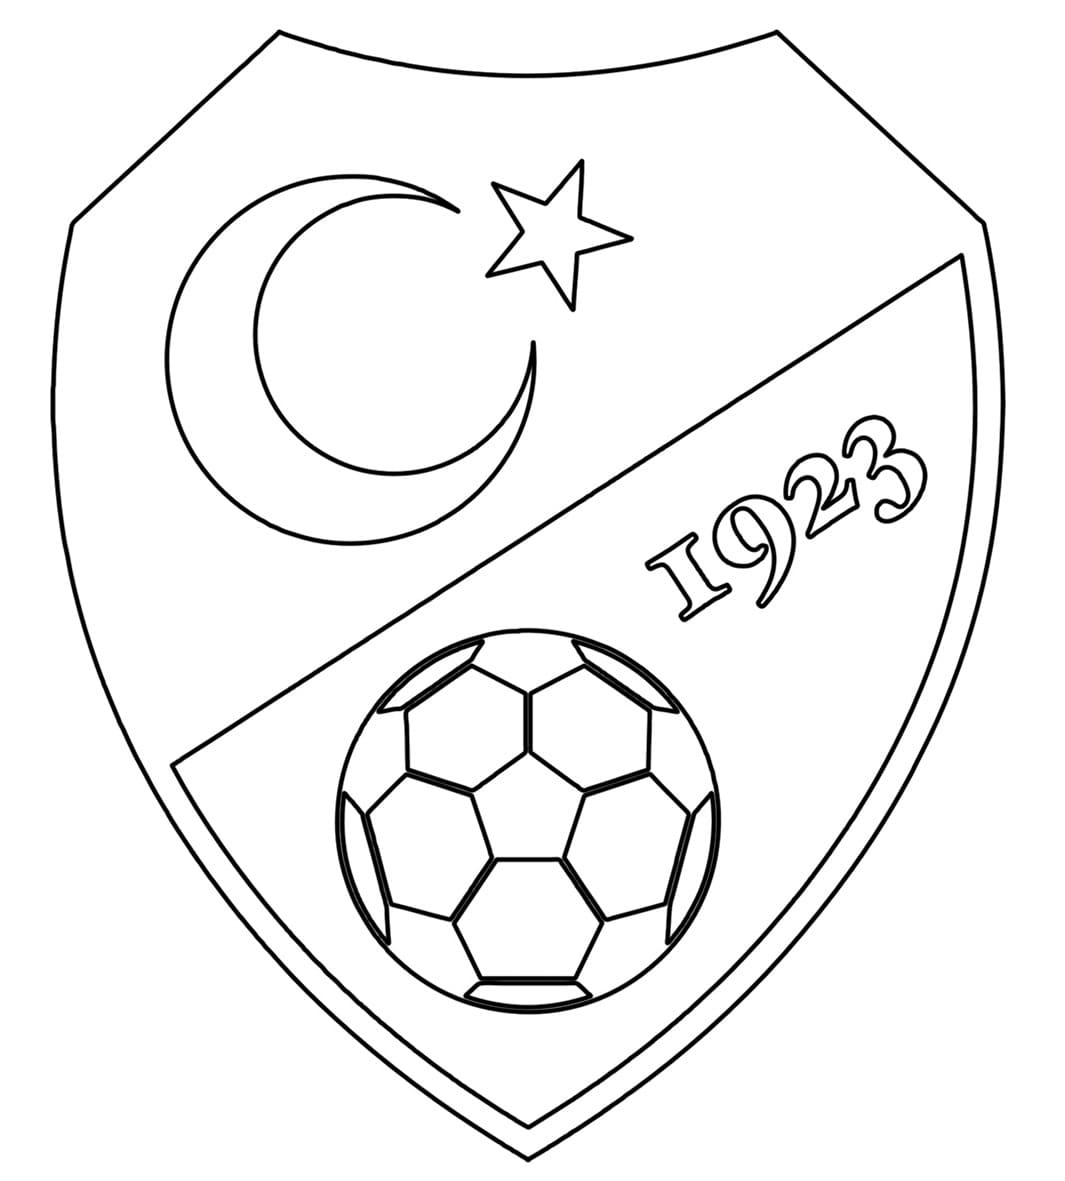 Coloriage Équipe de Turquie de Football